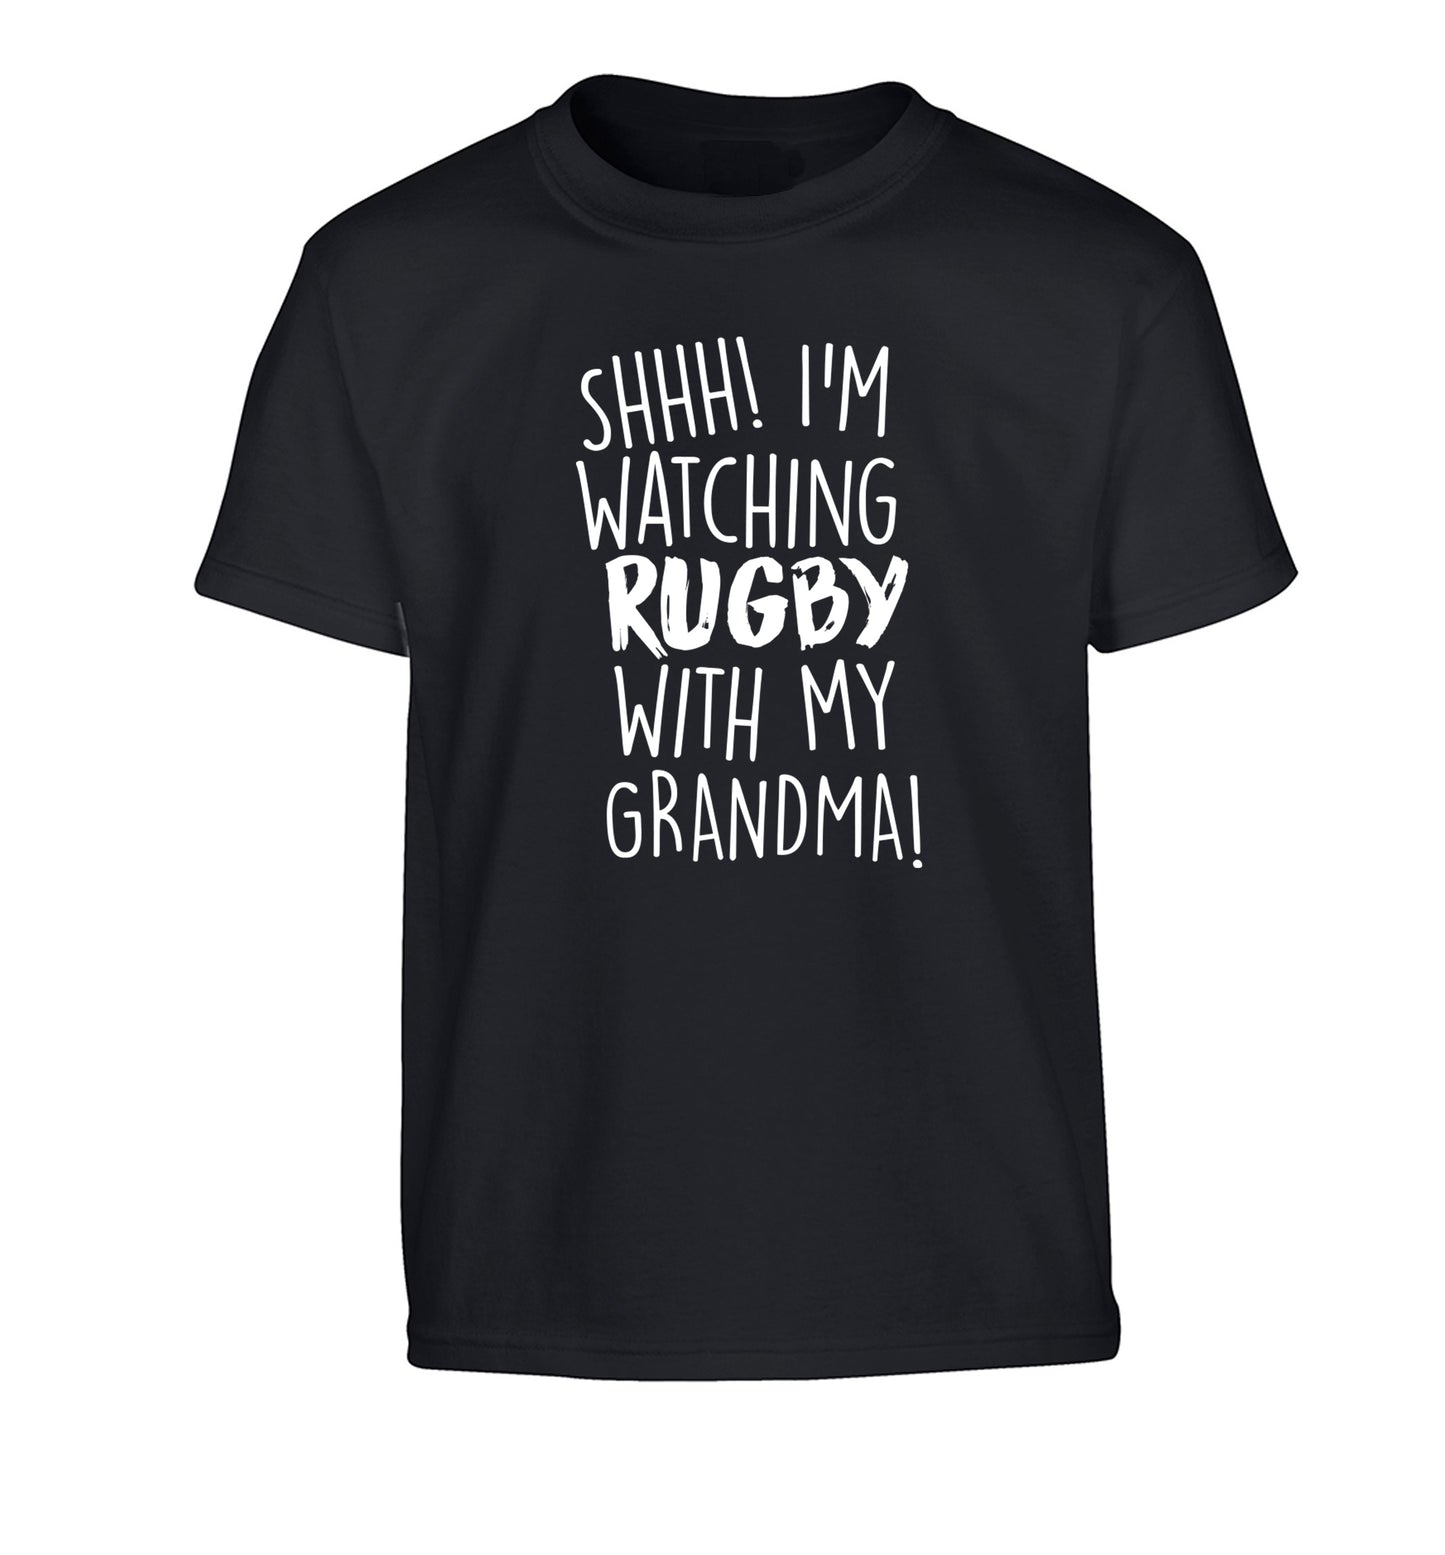 Shh I'm watching rugby with my grandma Children's black Tshirt 12-13 Years